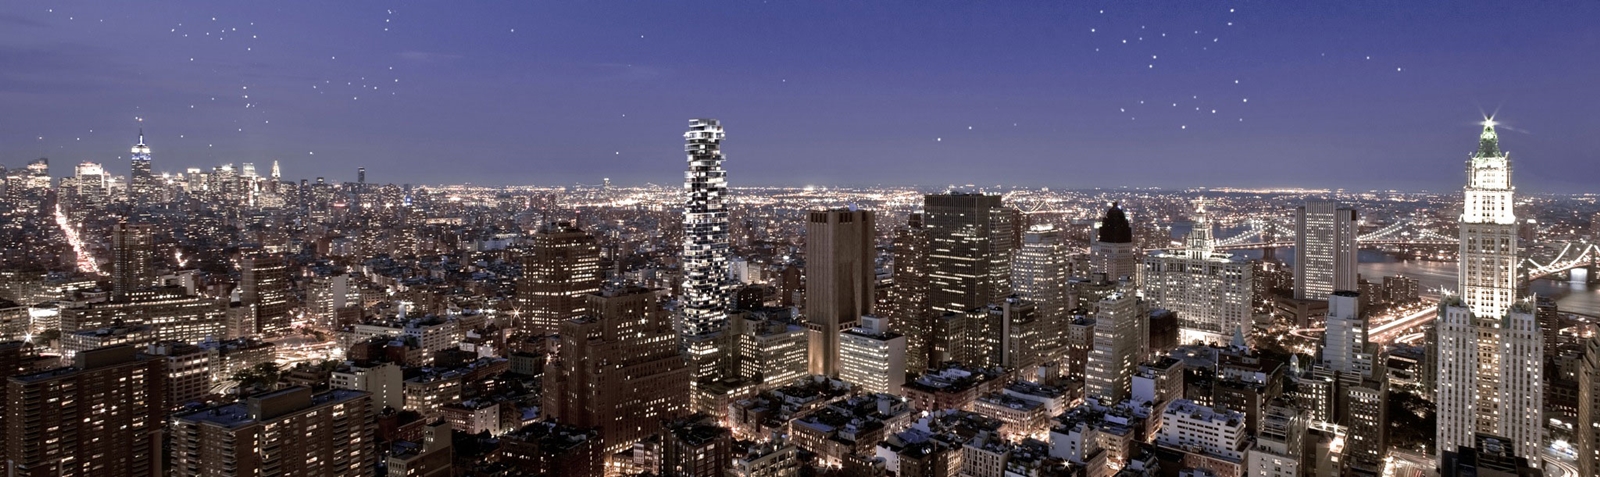 56 Leonard Street and Manhattan skyline at night